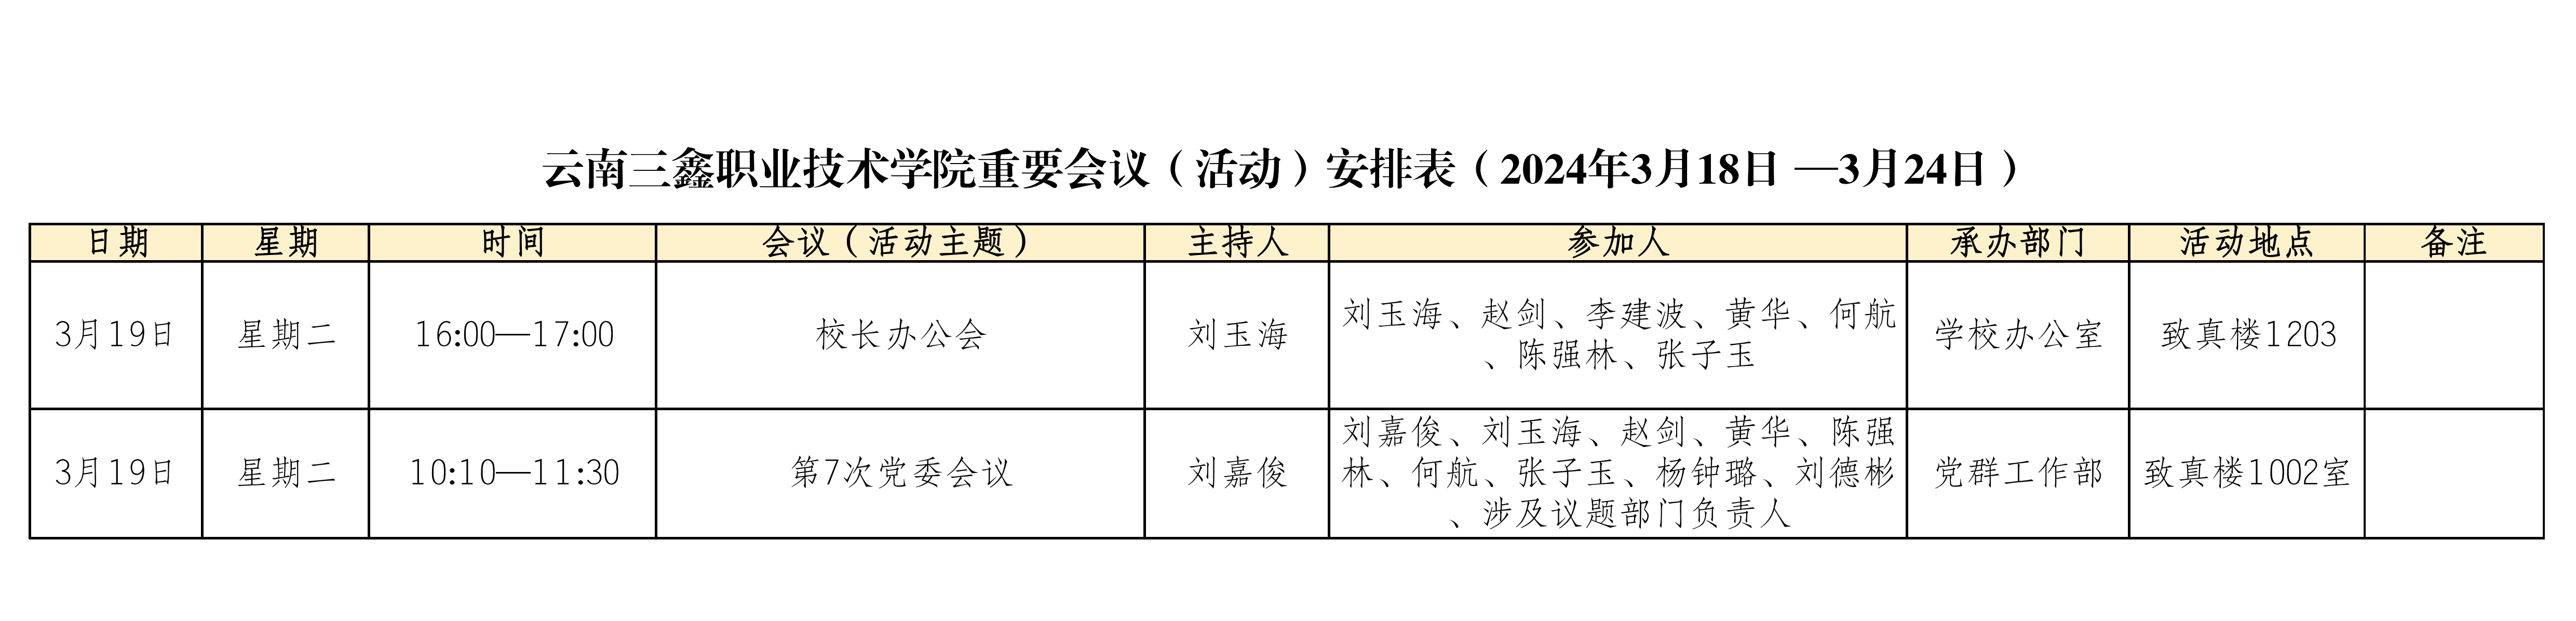 web天游线路检测中心重要会议（活动）安排表（2024年3月18日 —3月24日）